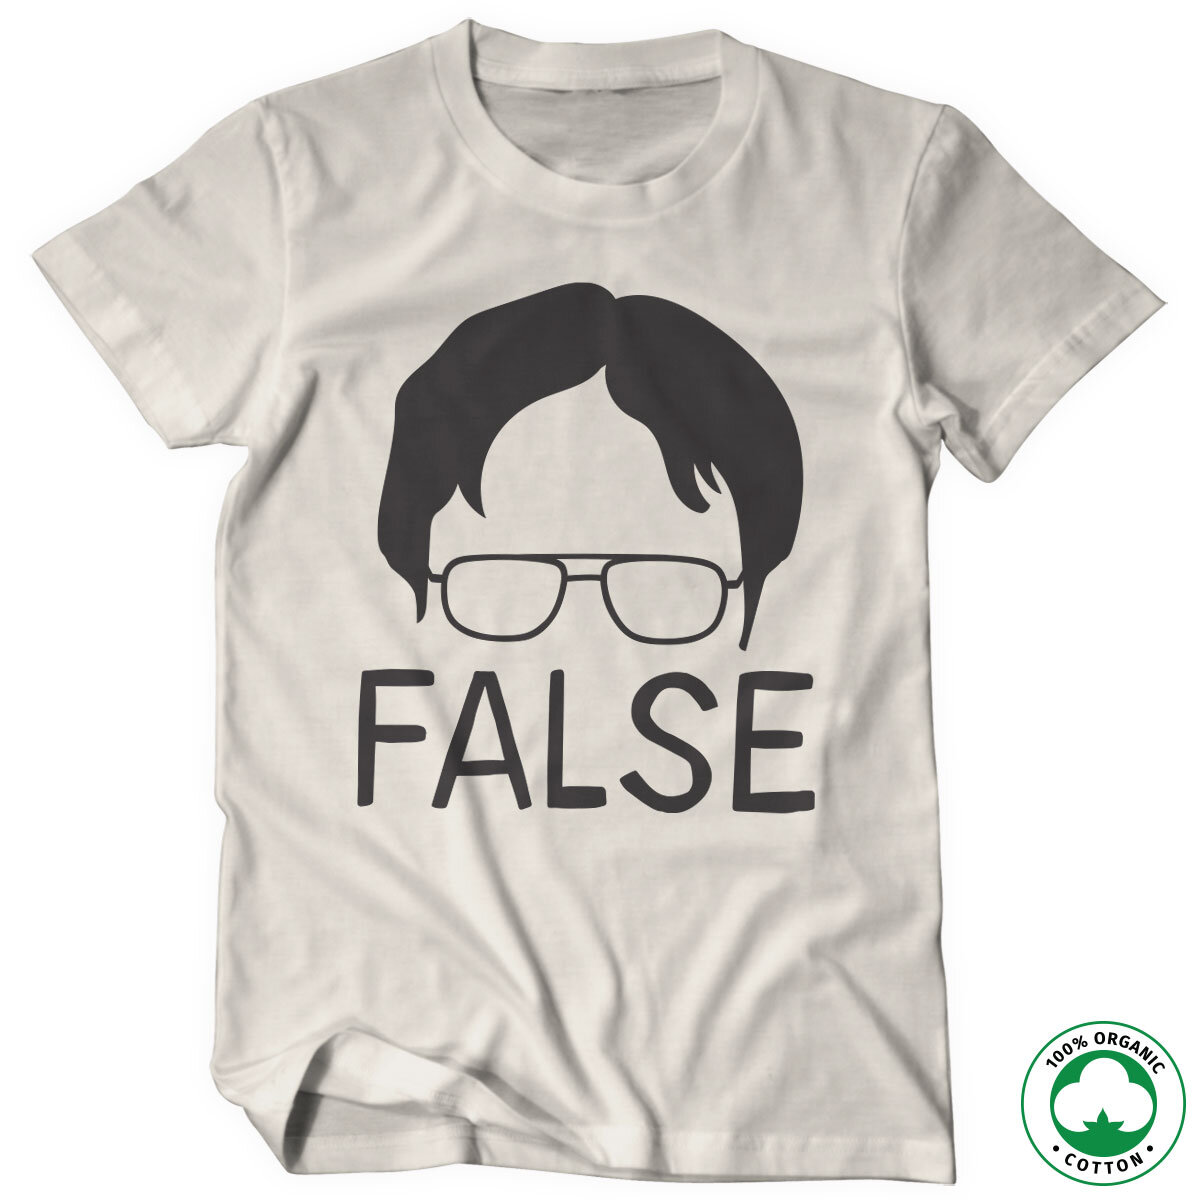 FALSE Organic T-Shirt